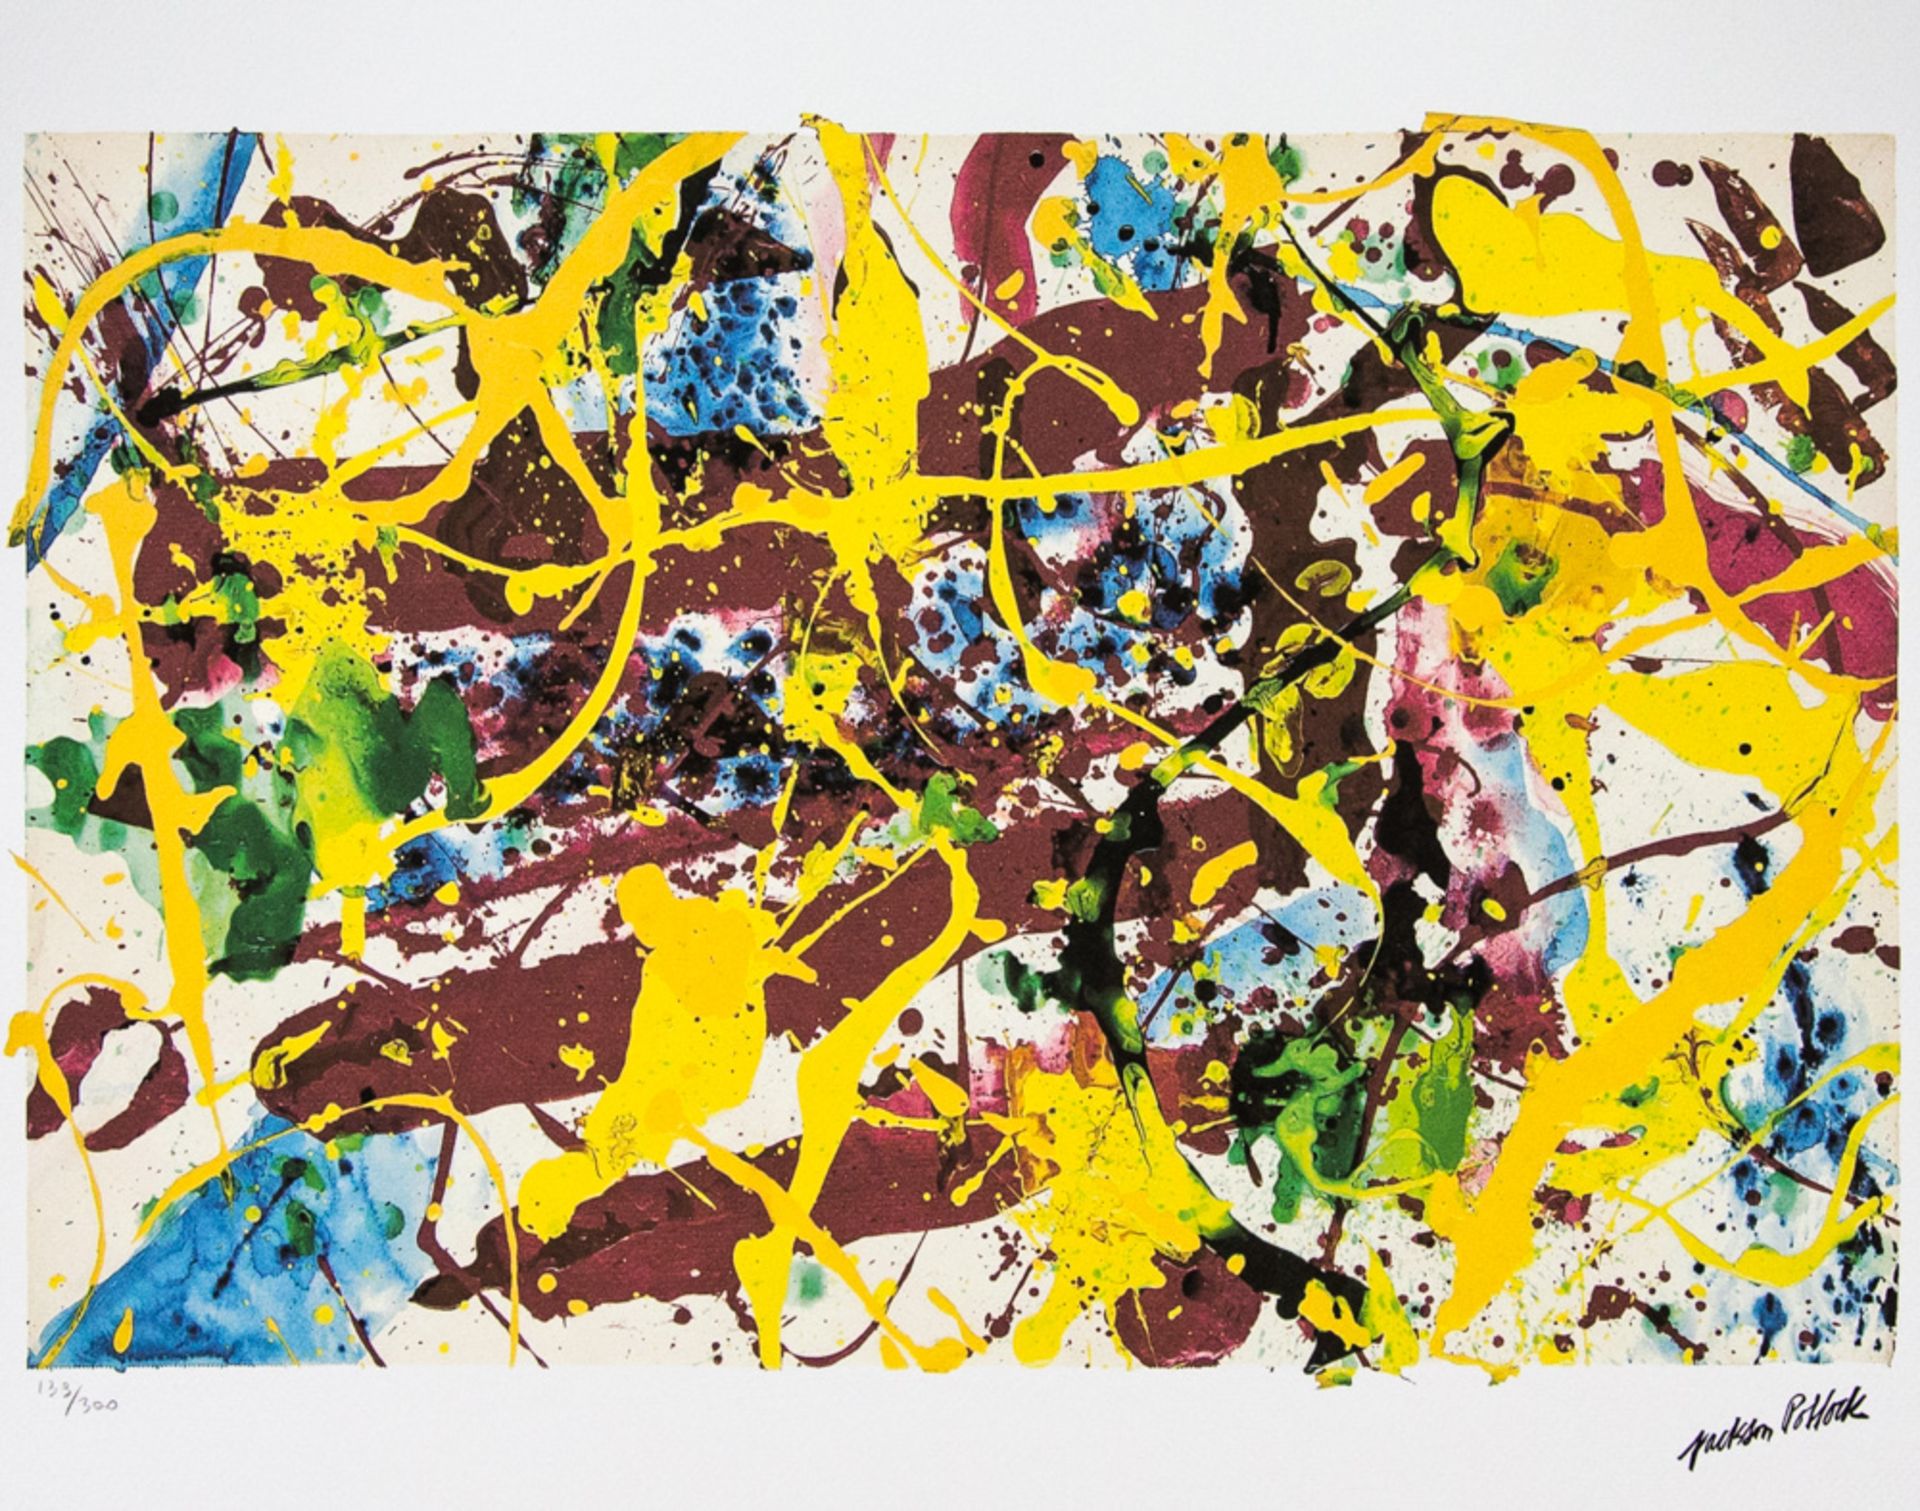 Jackson Pollock, abstract composition